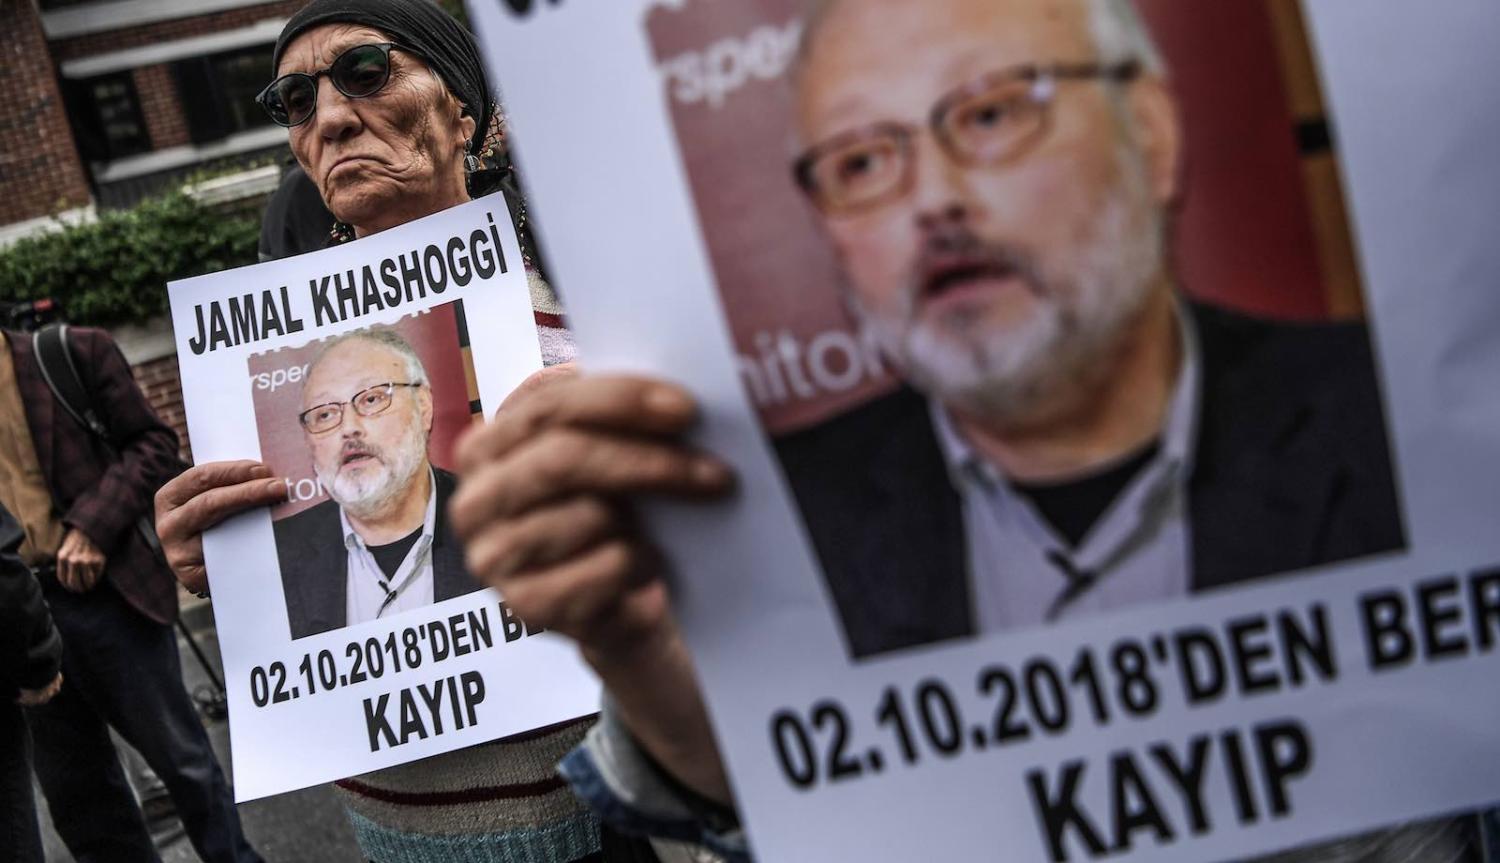 Demonstrators outside the Saudi consulate in Istanbul where journalist Jamal Khashoggi was last seen alive (Photo: Ozan Kose via Getty)